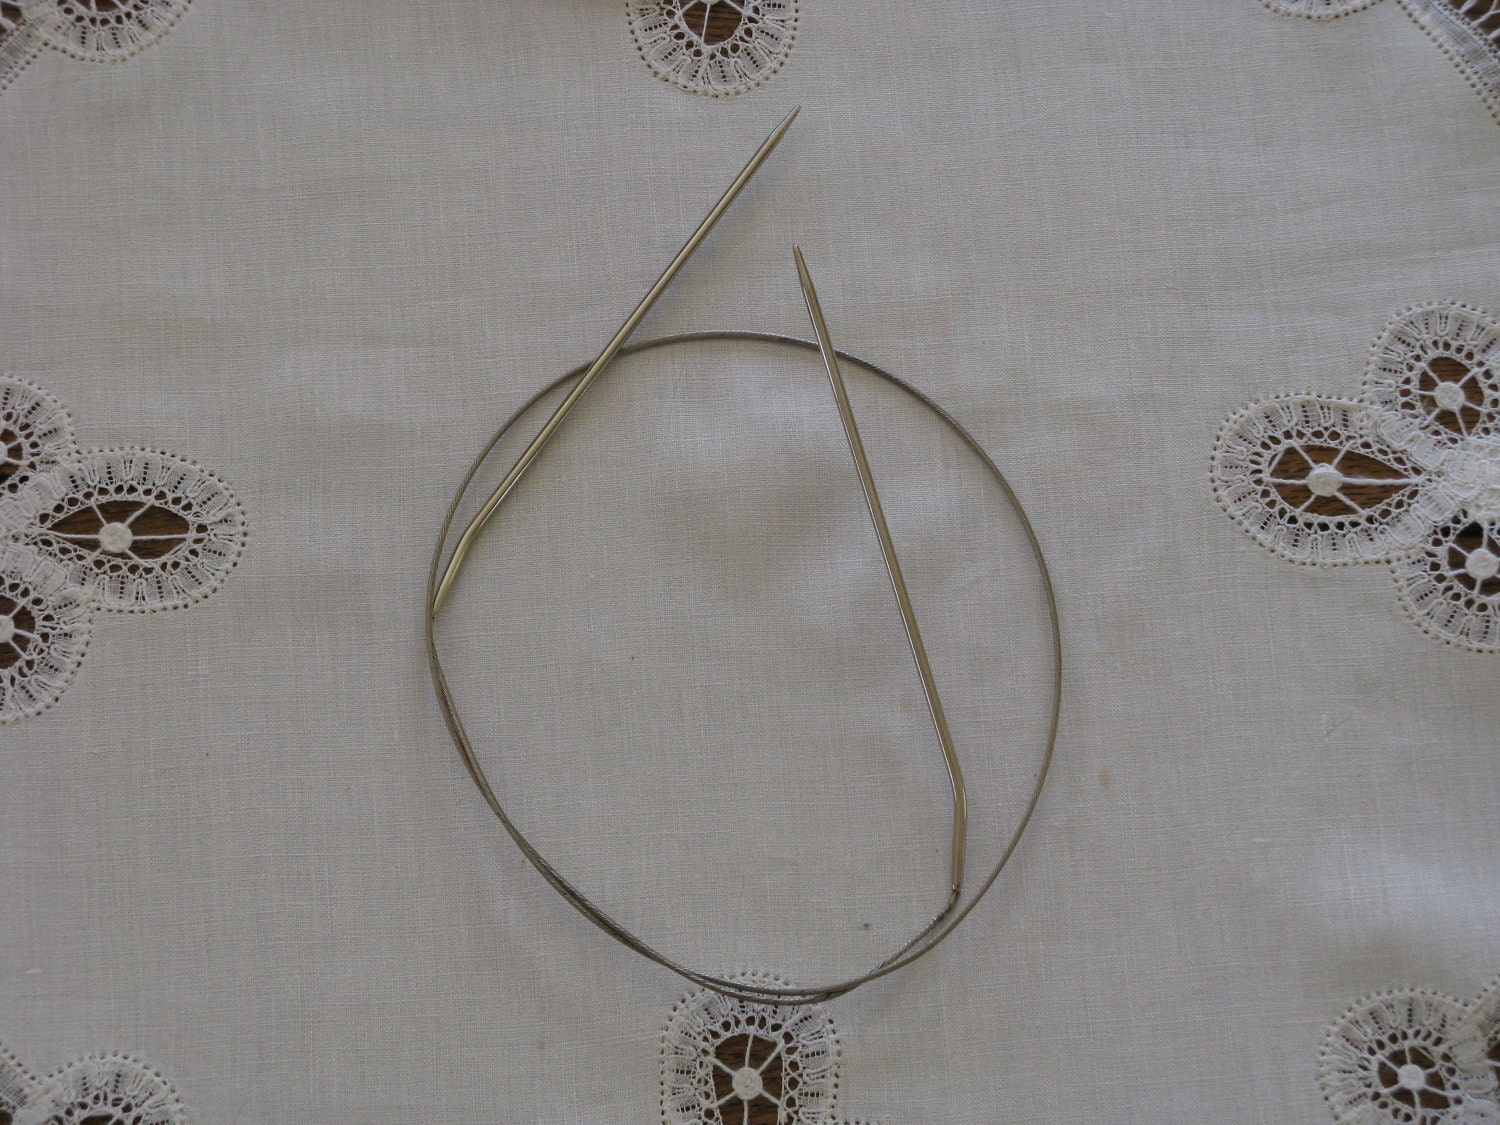 Circular Knitting Needles Size 19